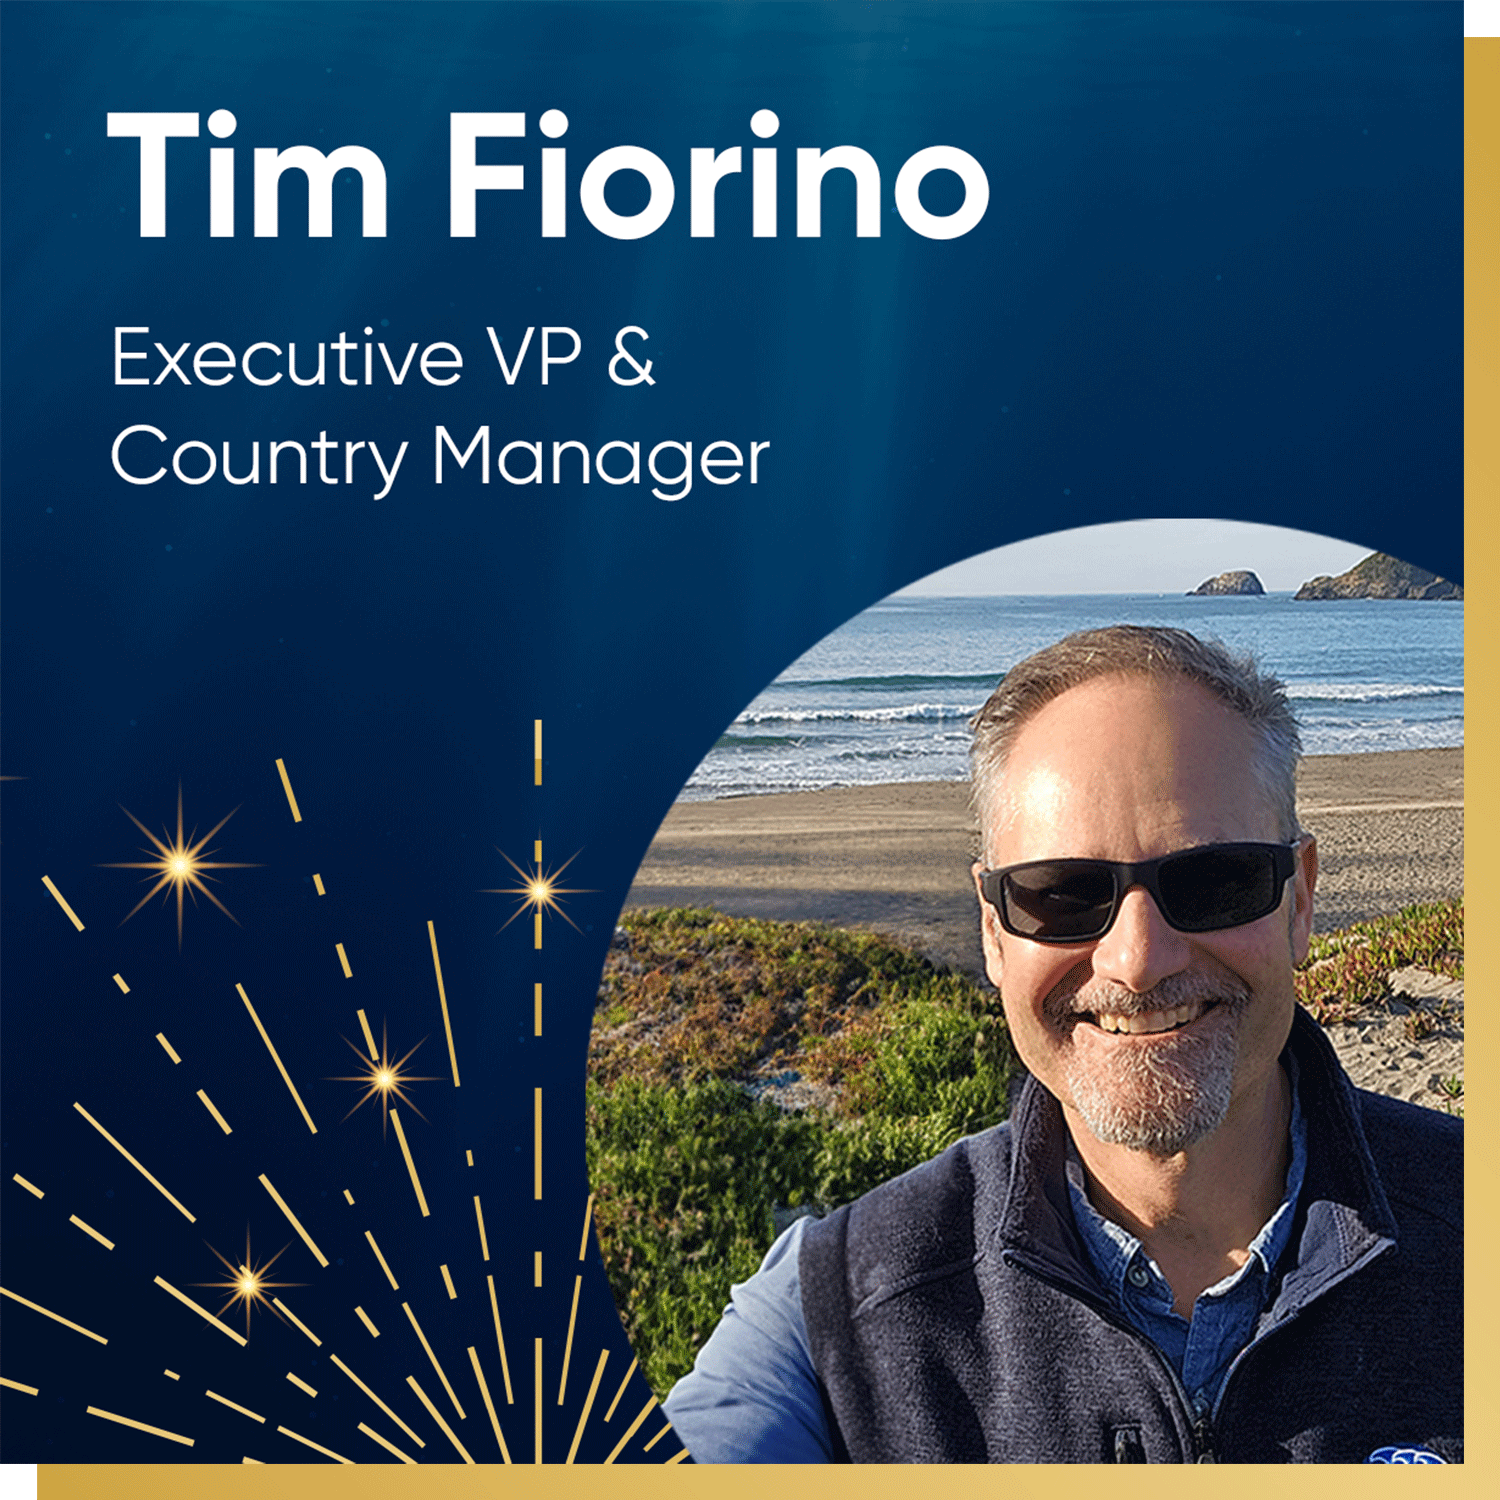 Employee Spotlight - Tim Fiorino, Executive VP & Country Manager, Wild Planet